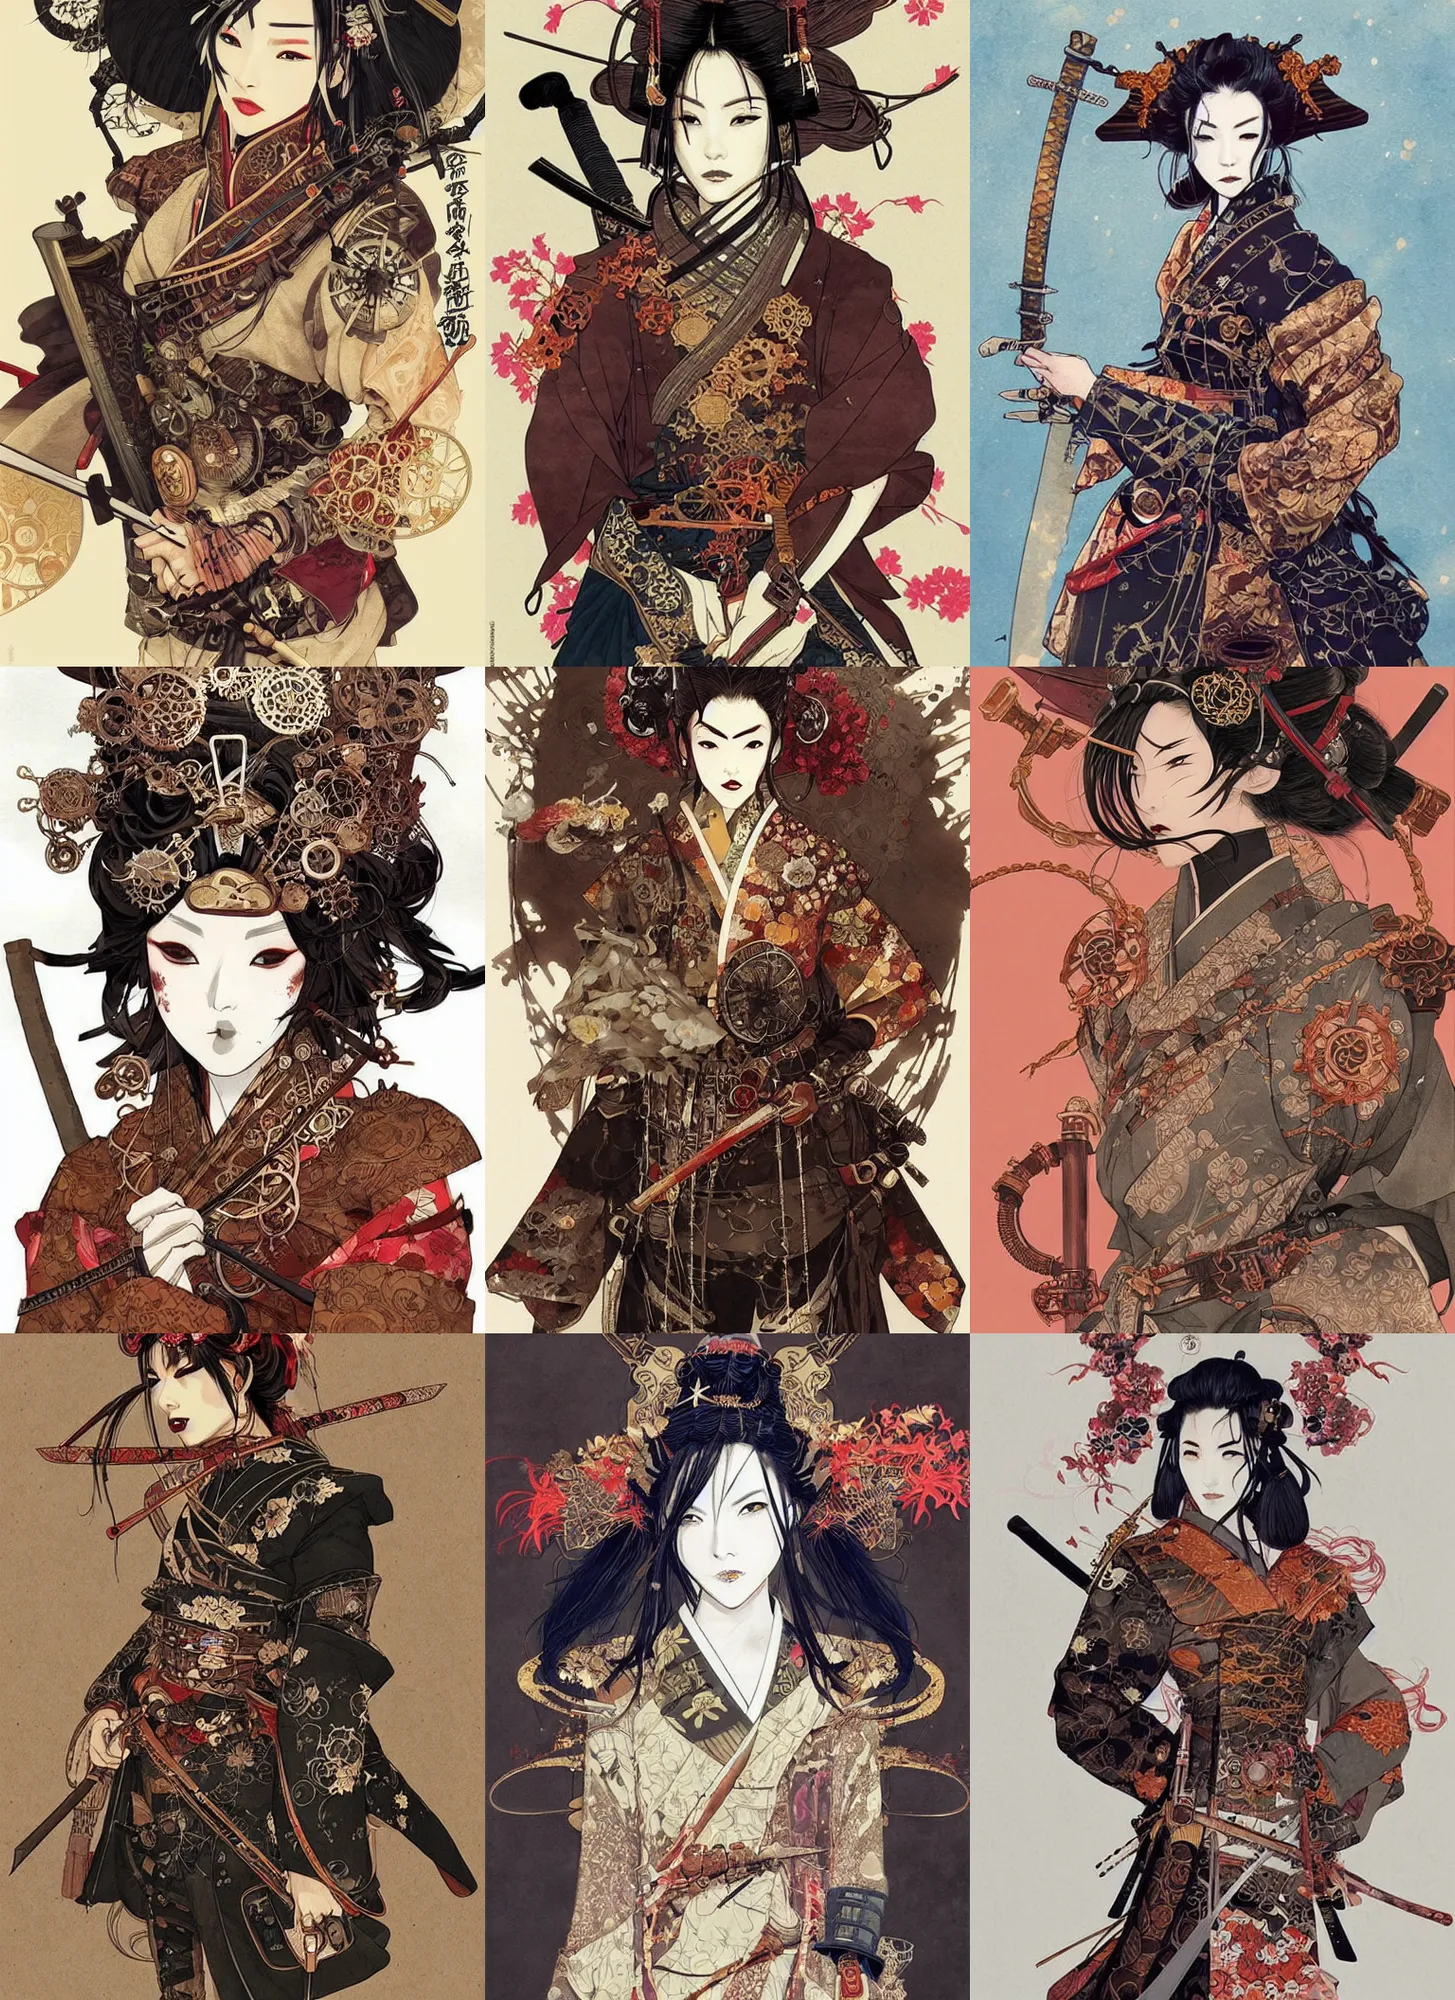 Prompt: very beautiful steampunk samurai, detailed portrait, wearing kimono armor, sword, by conrad roset, takato yomamoto, jesper ejsing, beautiful